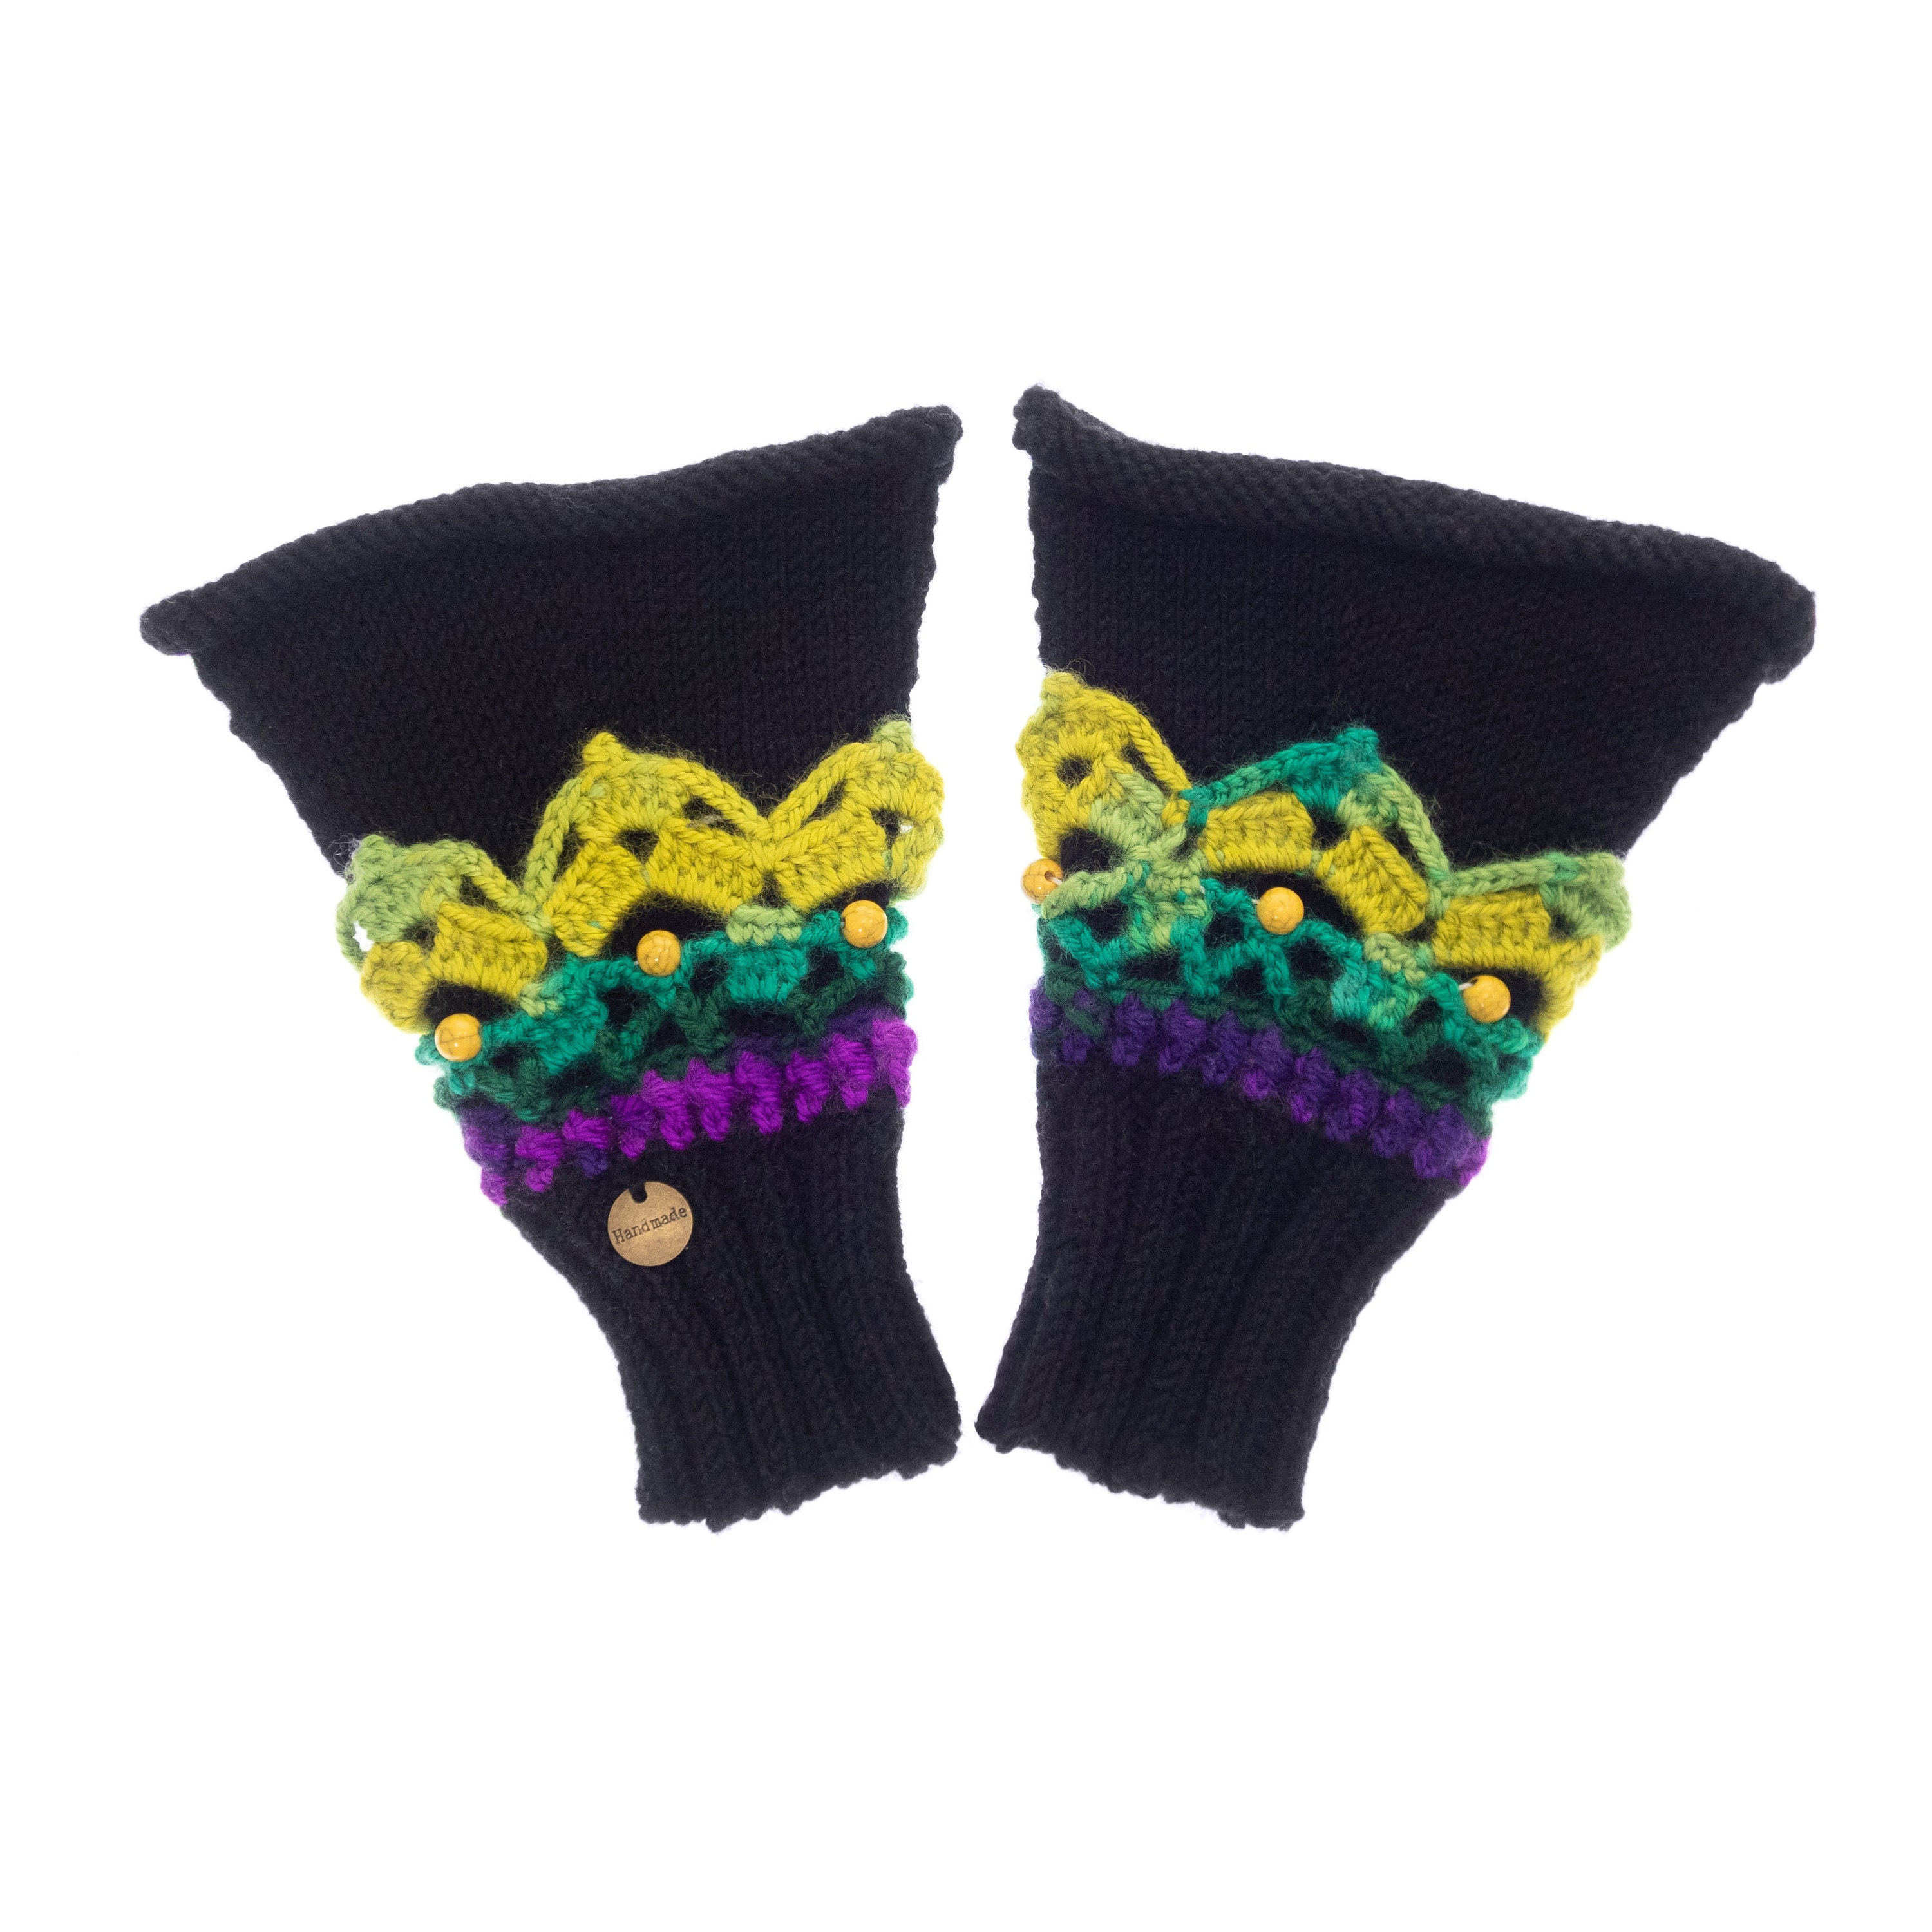 Gloves for Women. Woolen Hand Gloves for Ladies